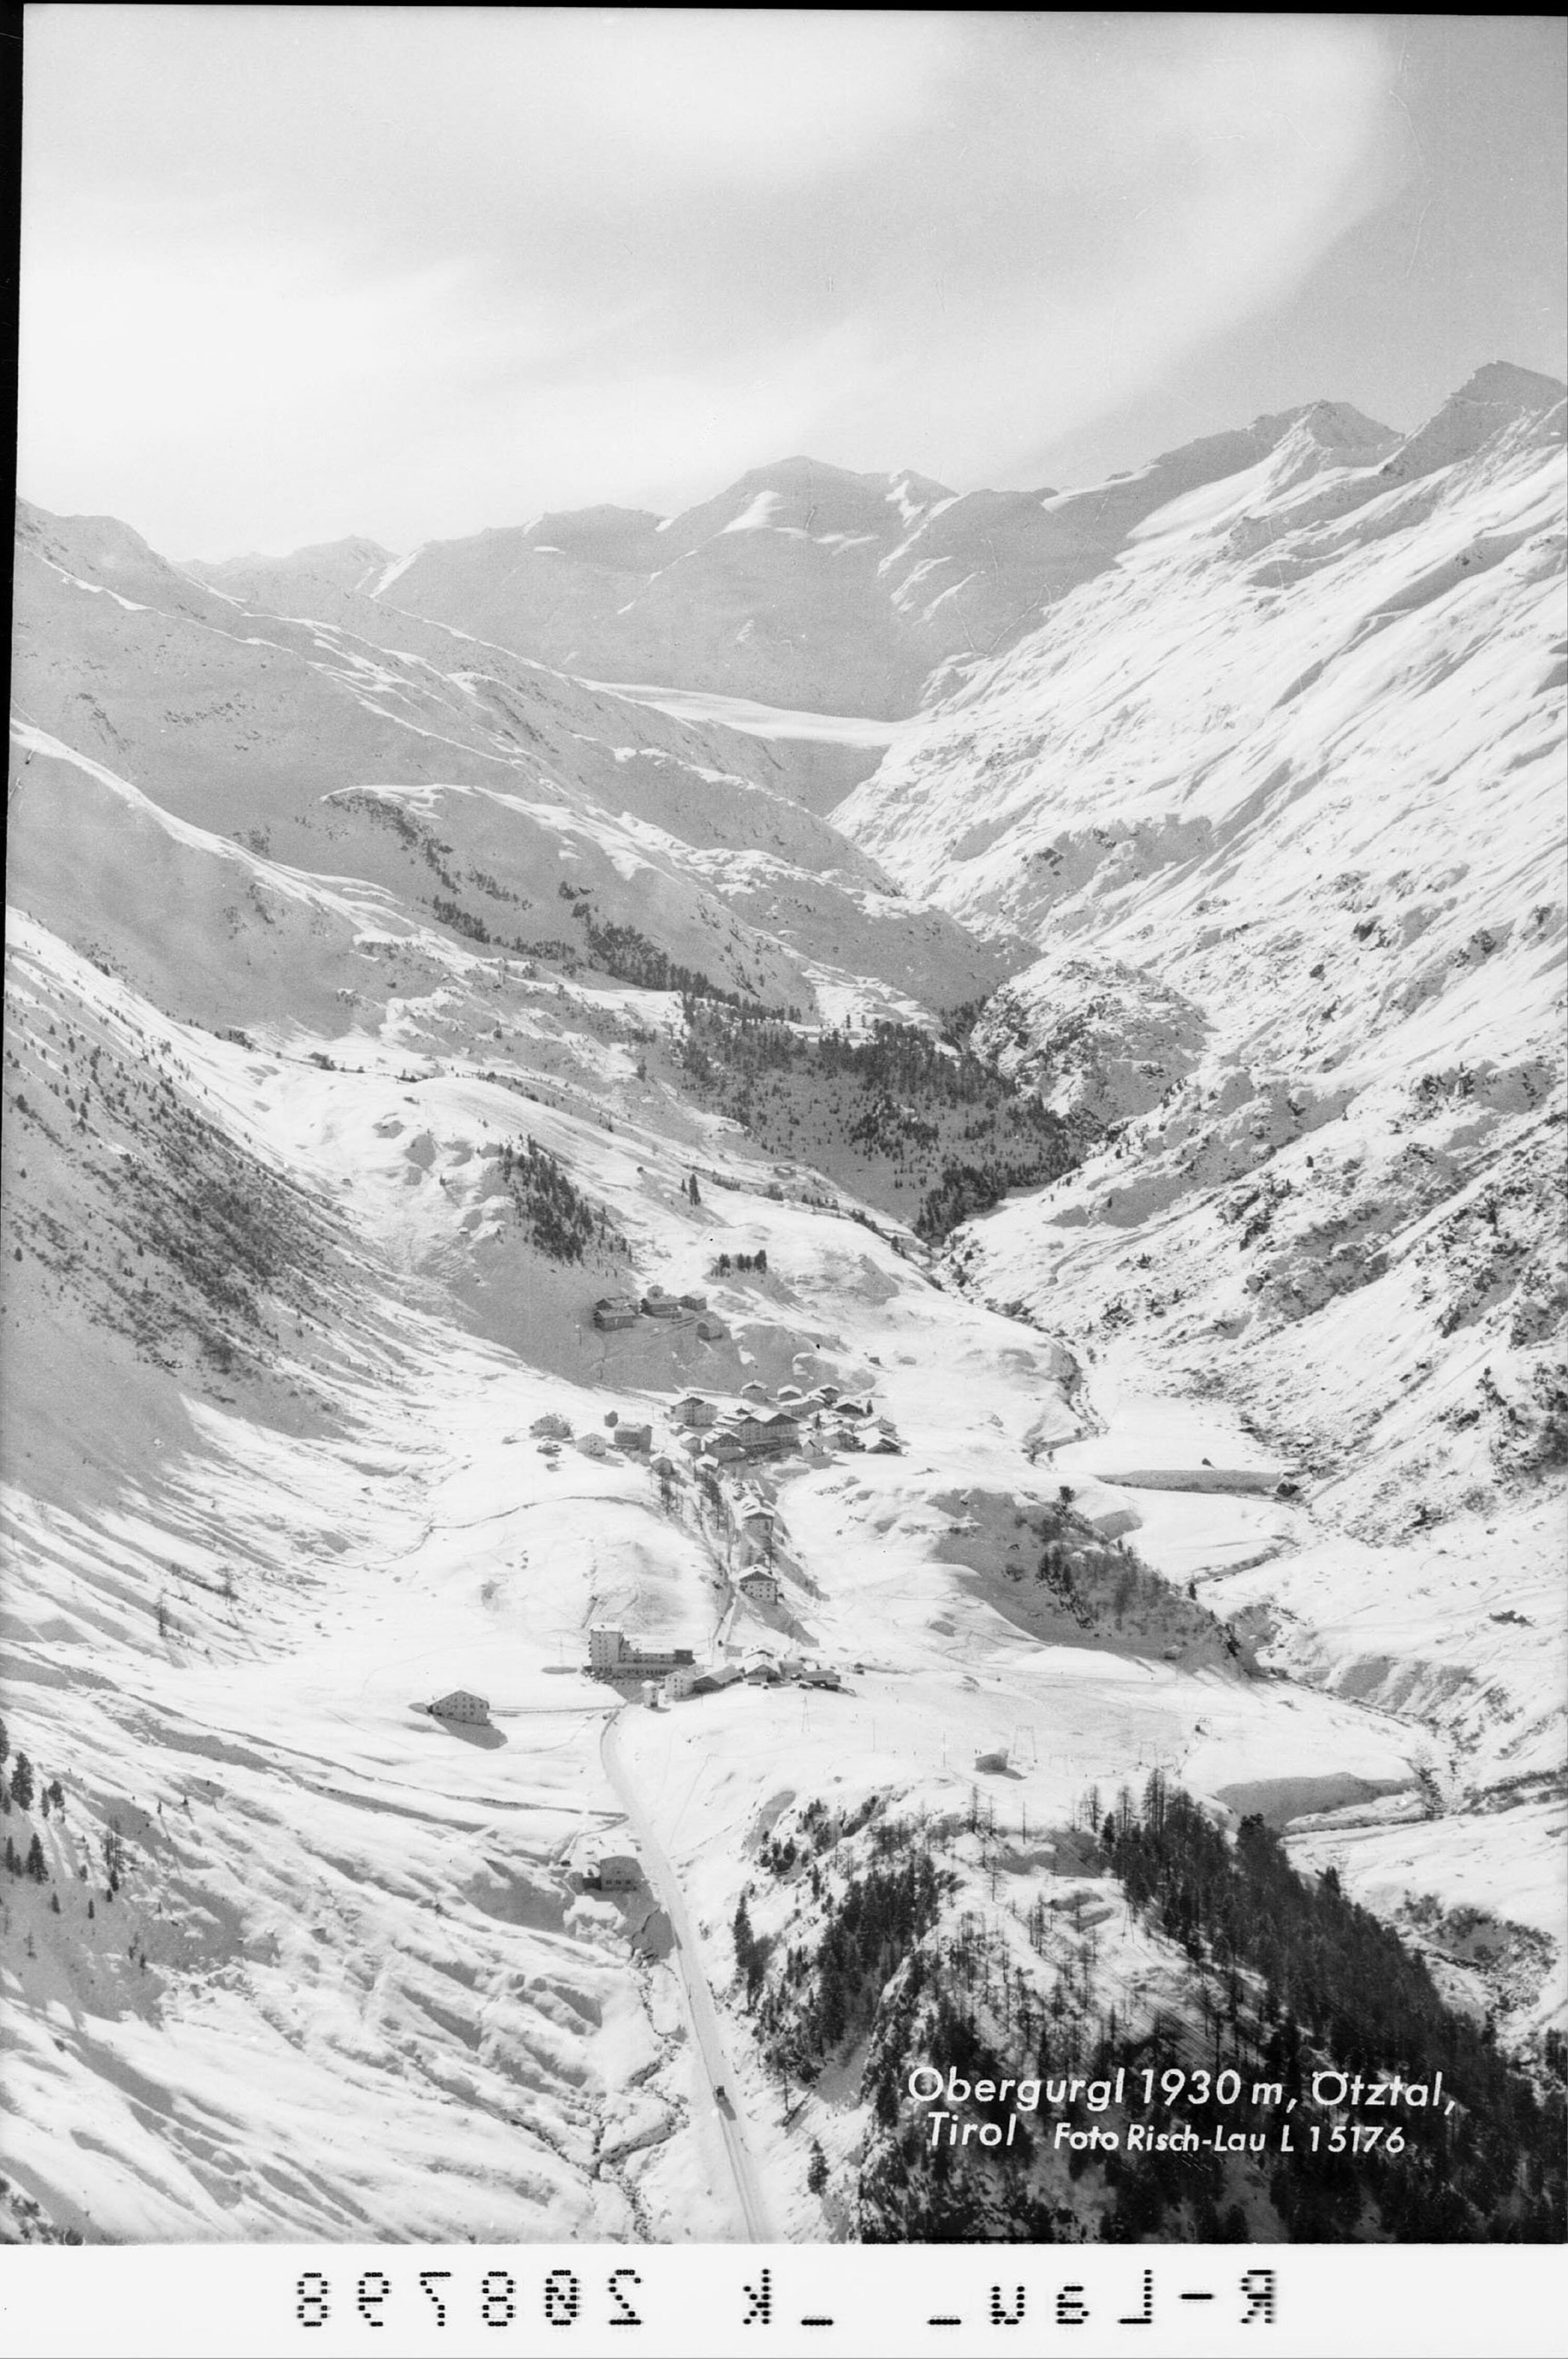 Obergurgl 1930 m, Ötztal, Tirol></div>


    <hr>
    <div class=